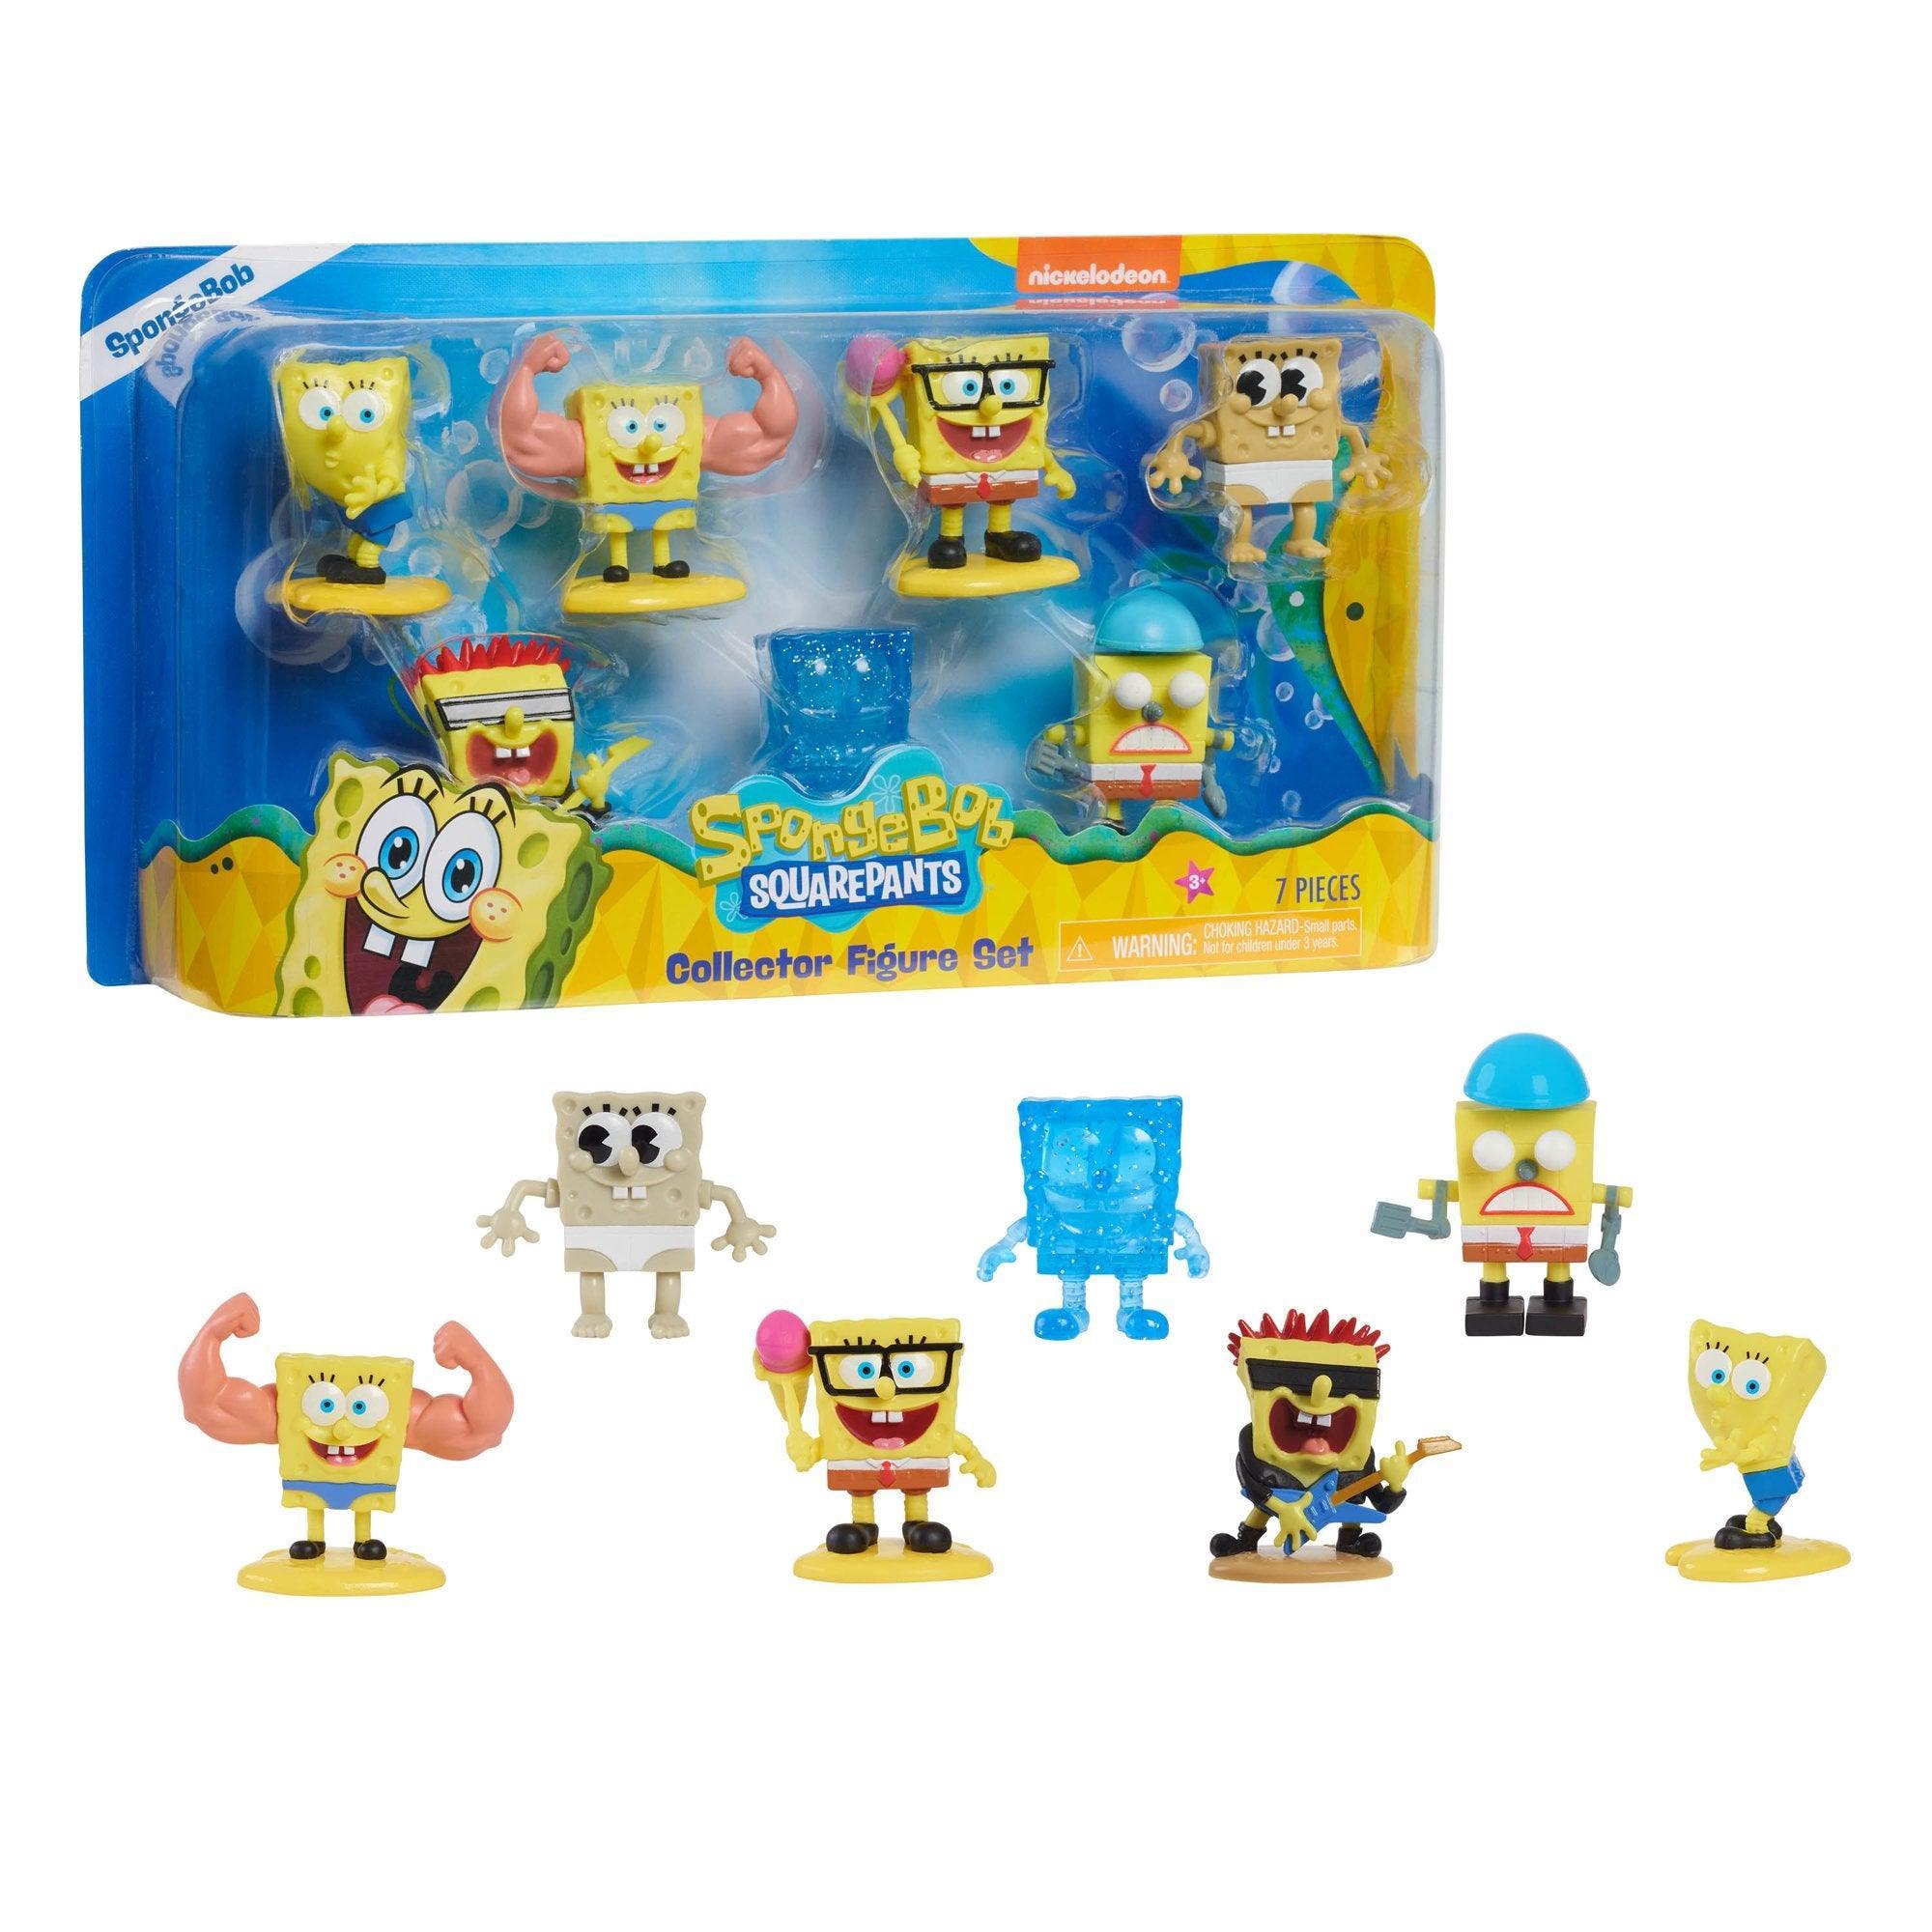 SpongeBob SquarePants Collectible Figure Set - BumbleToys - 5-7 Years, Boys, Figures, Heroes, Pre-Order, SpongeBob